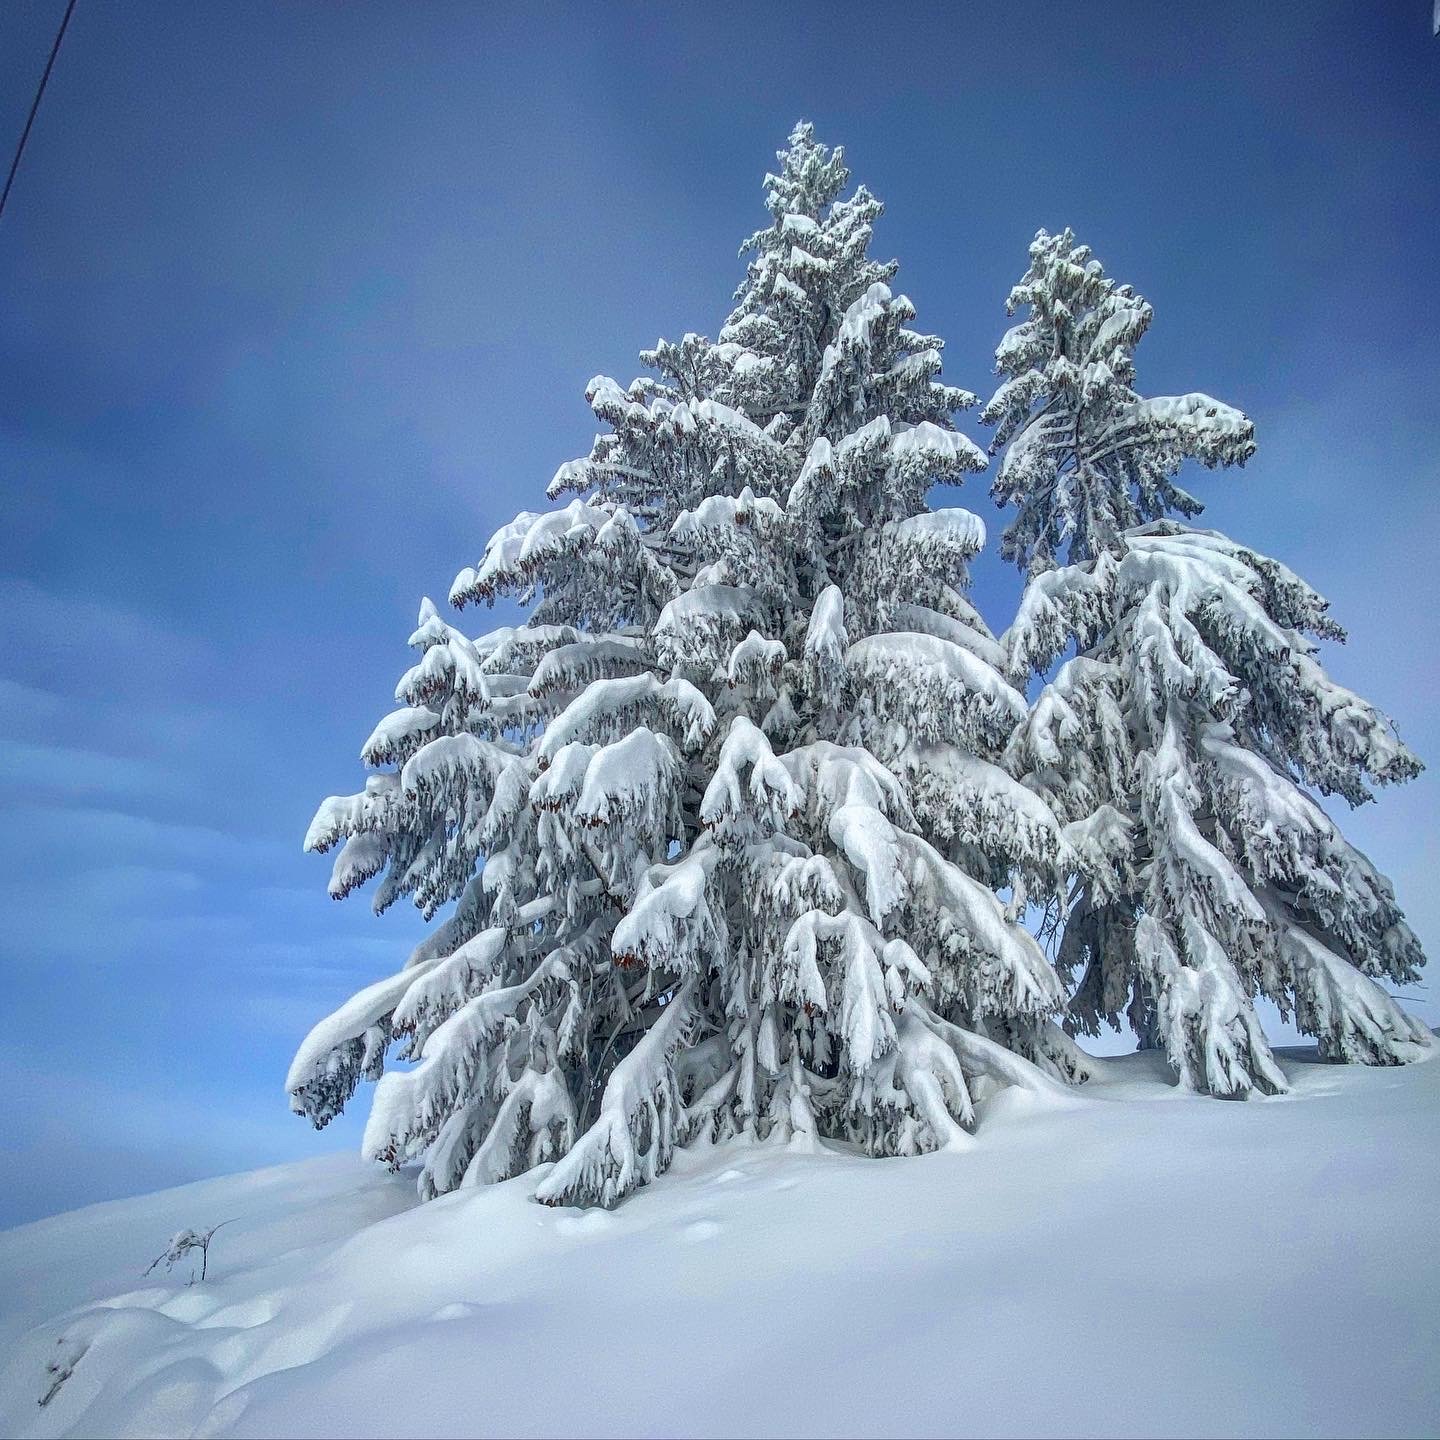 tree heavy with snow.jpg